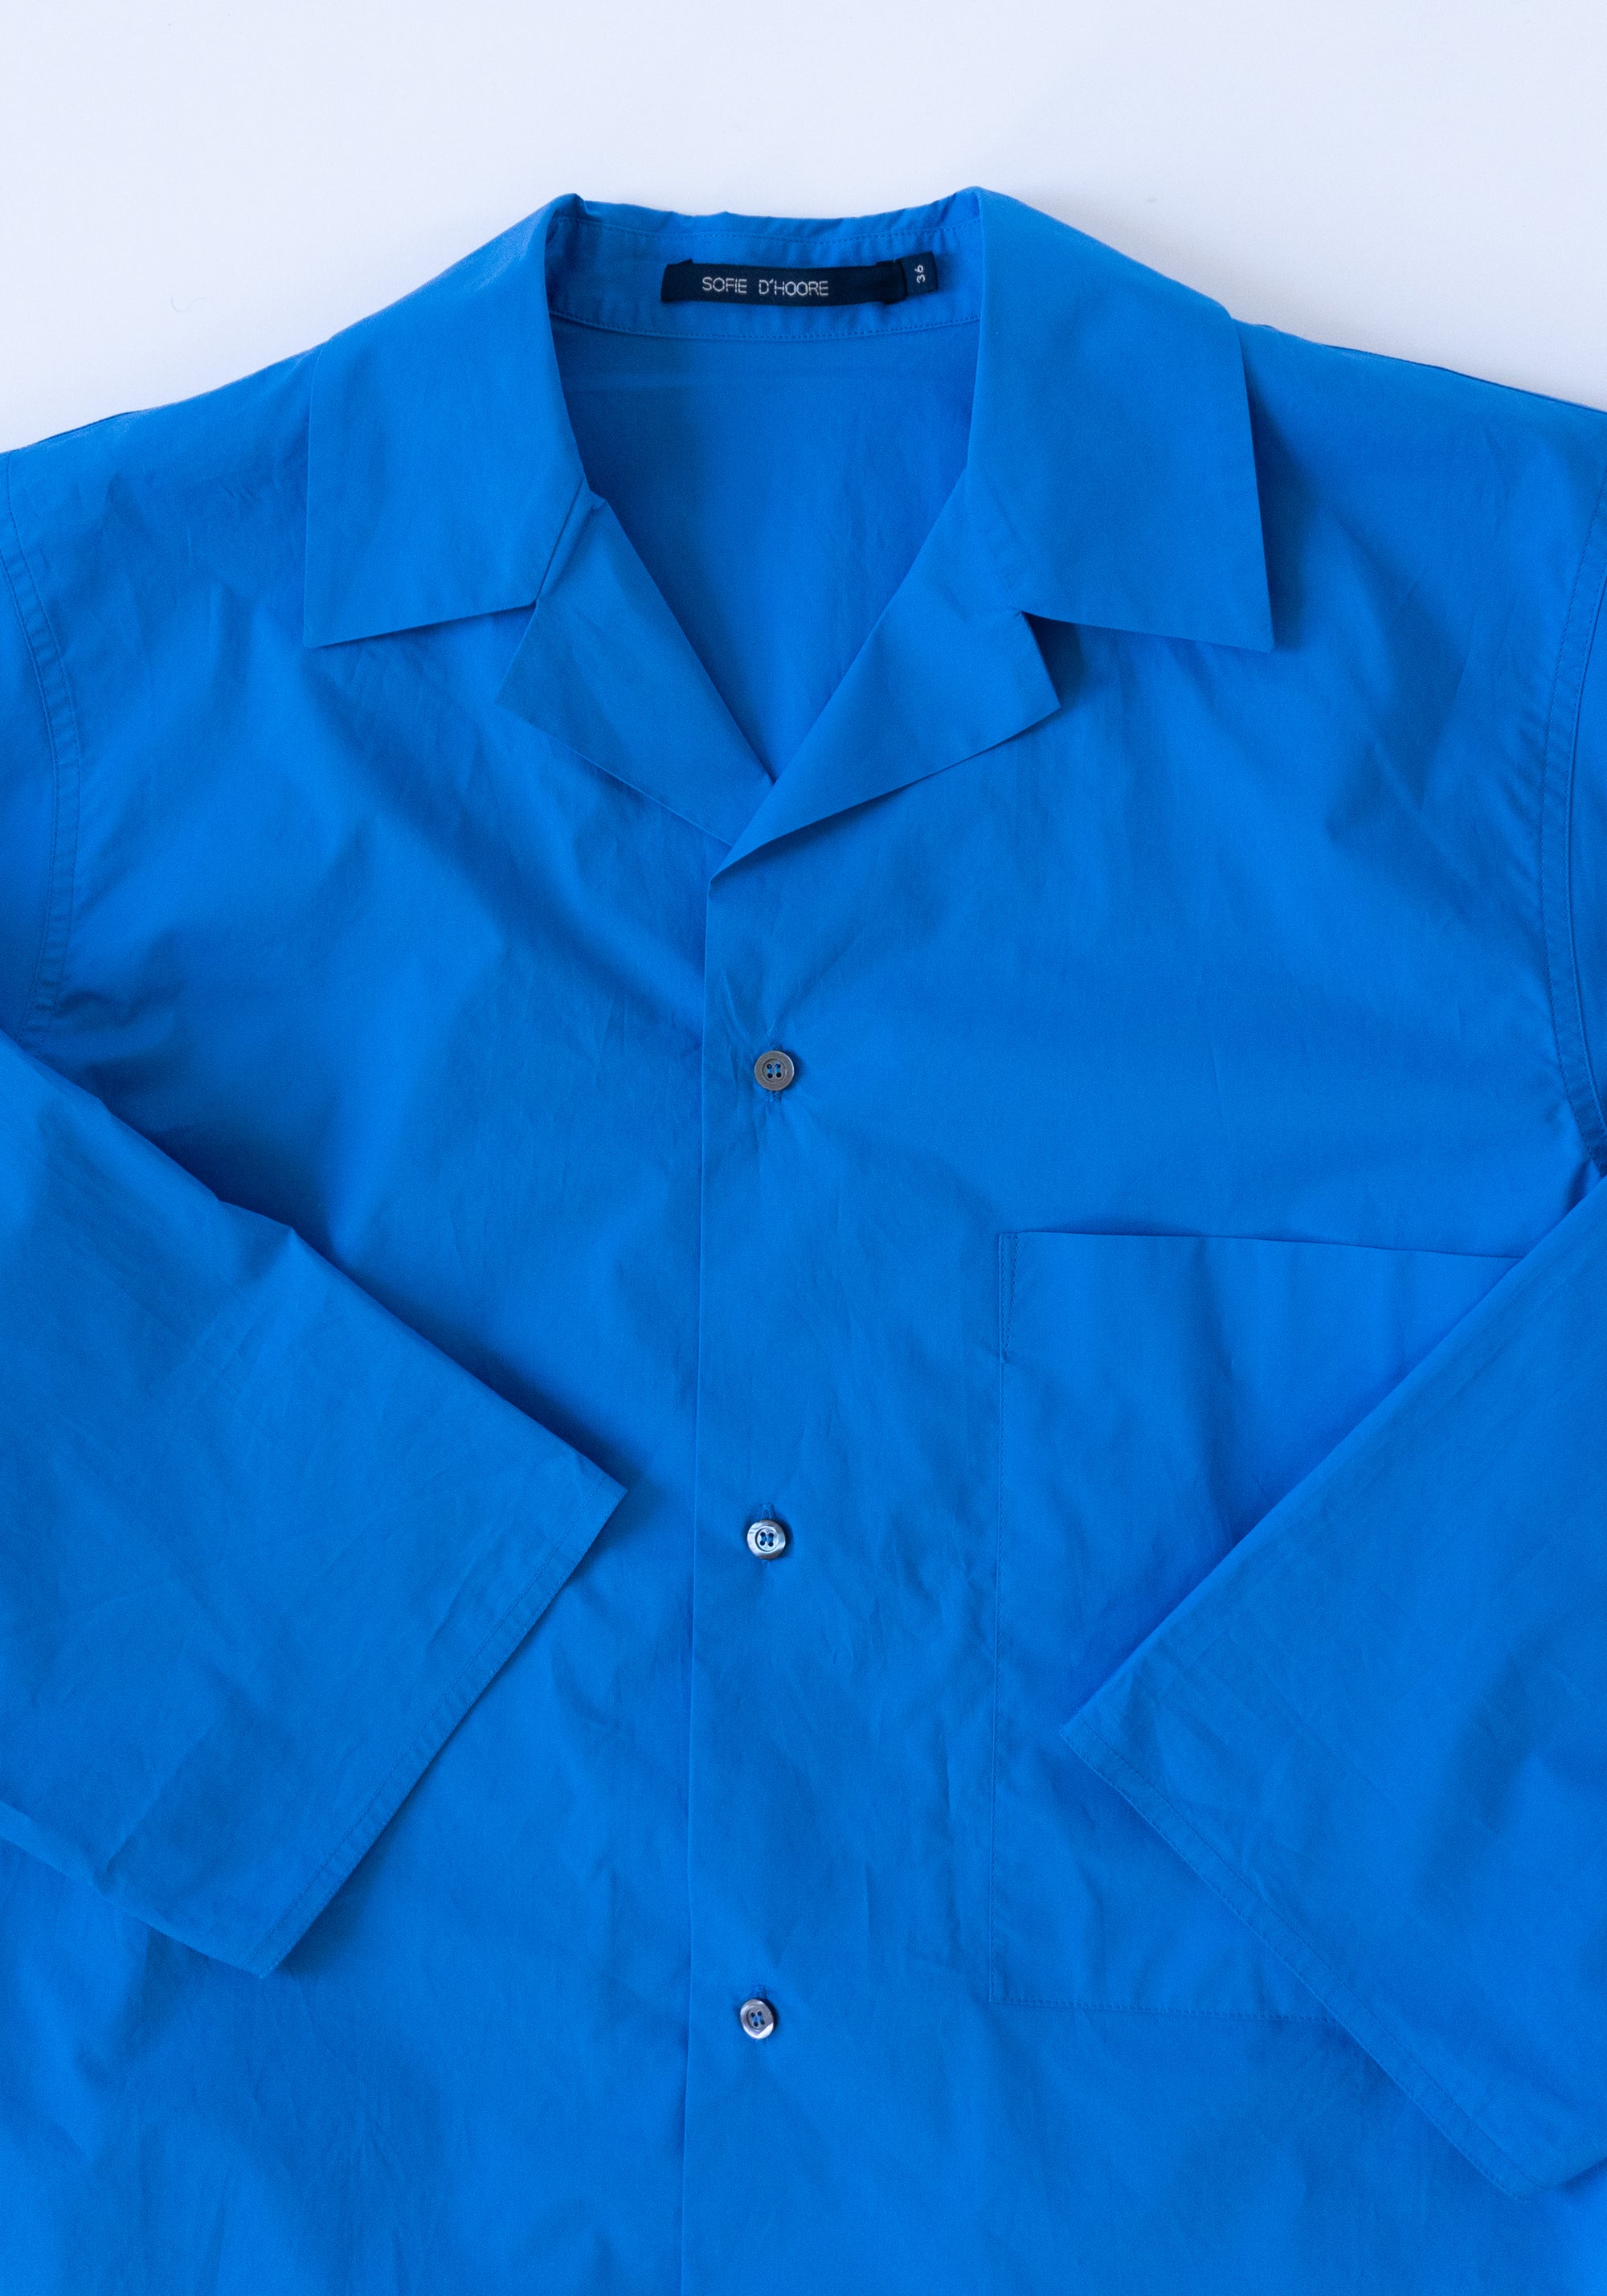 Barry Shirt in Bluette